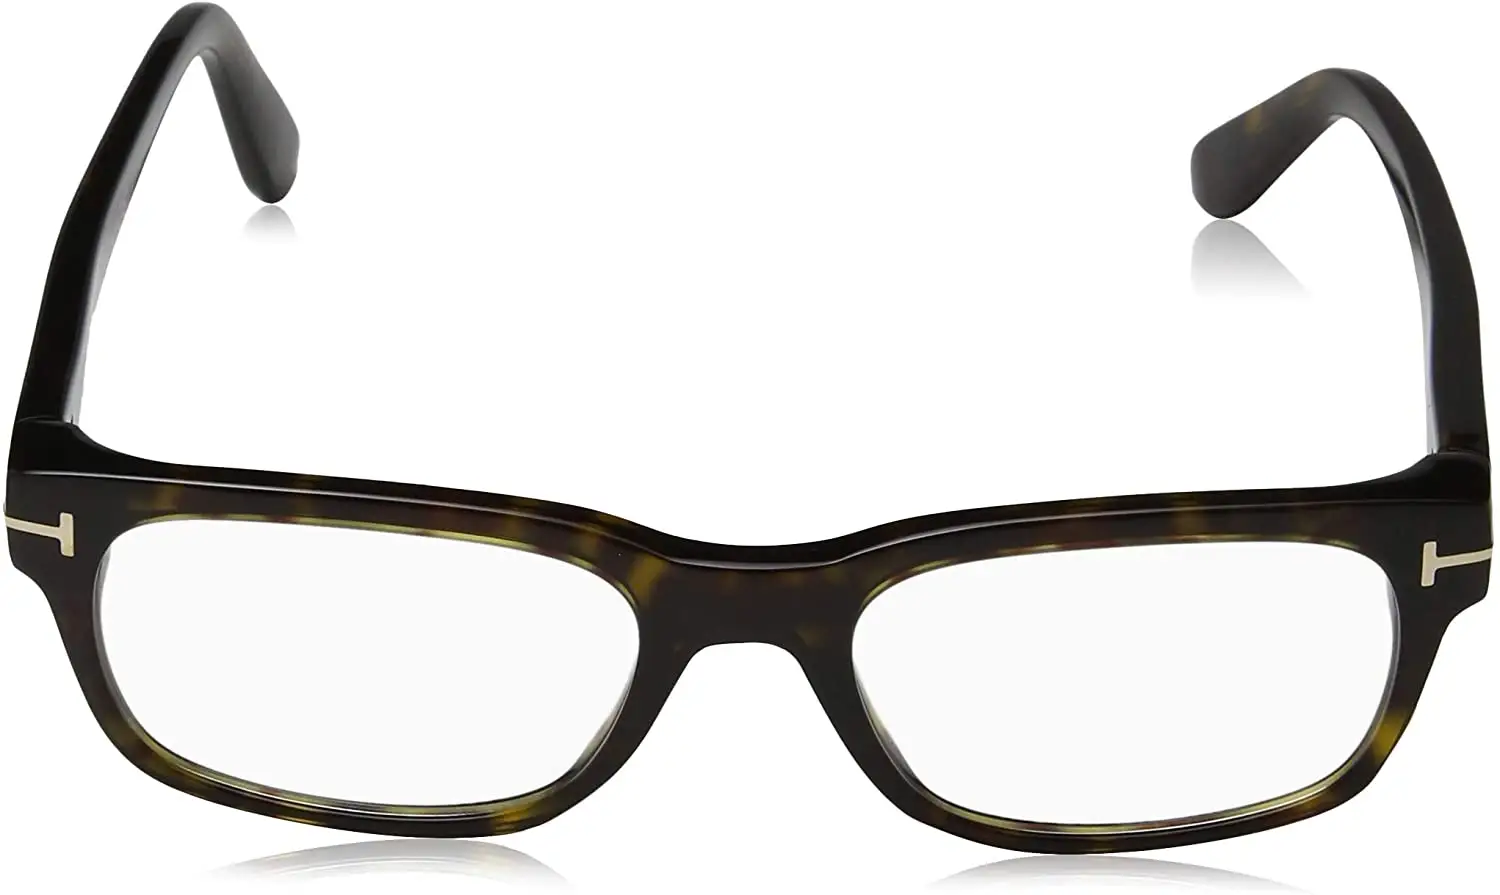 Authentic Tom Ford Sunglasses Ft5432 Eyeglasses 052 Dark Havana Sunglasses For Women And Men Lazada Ph